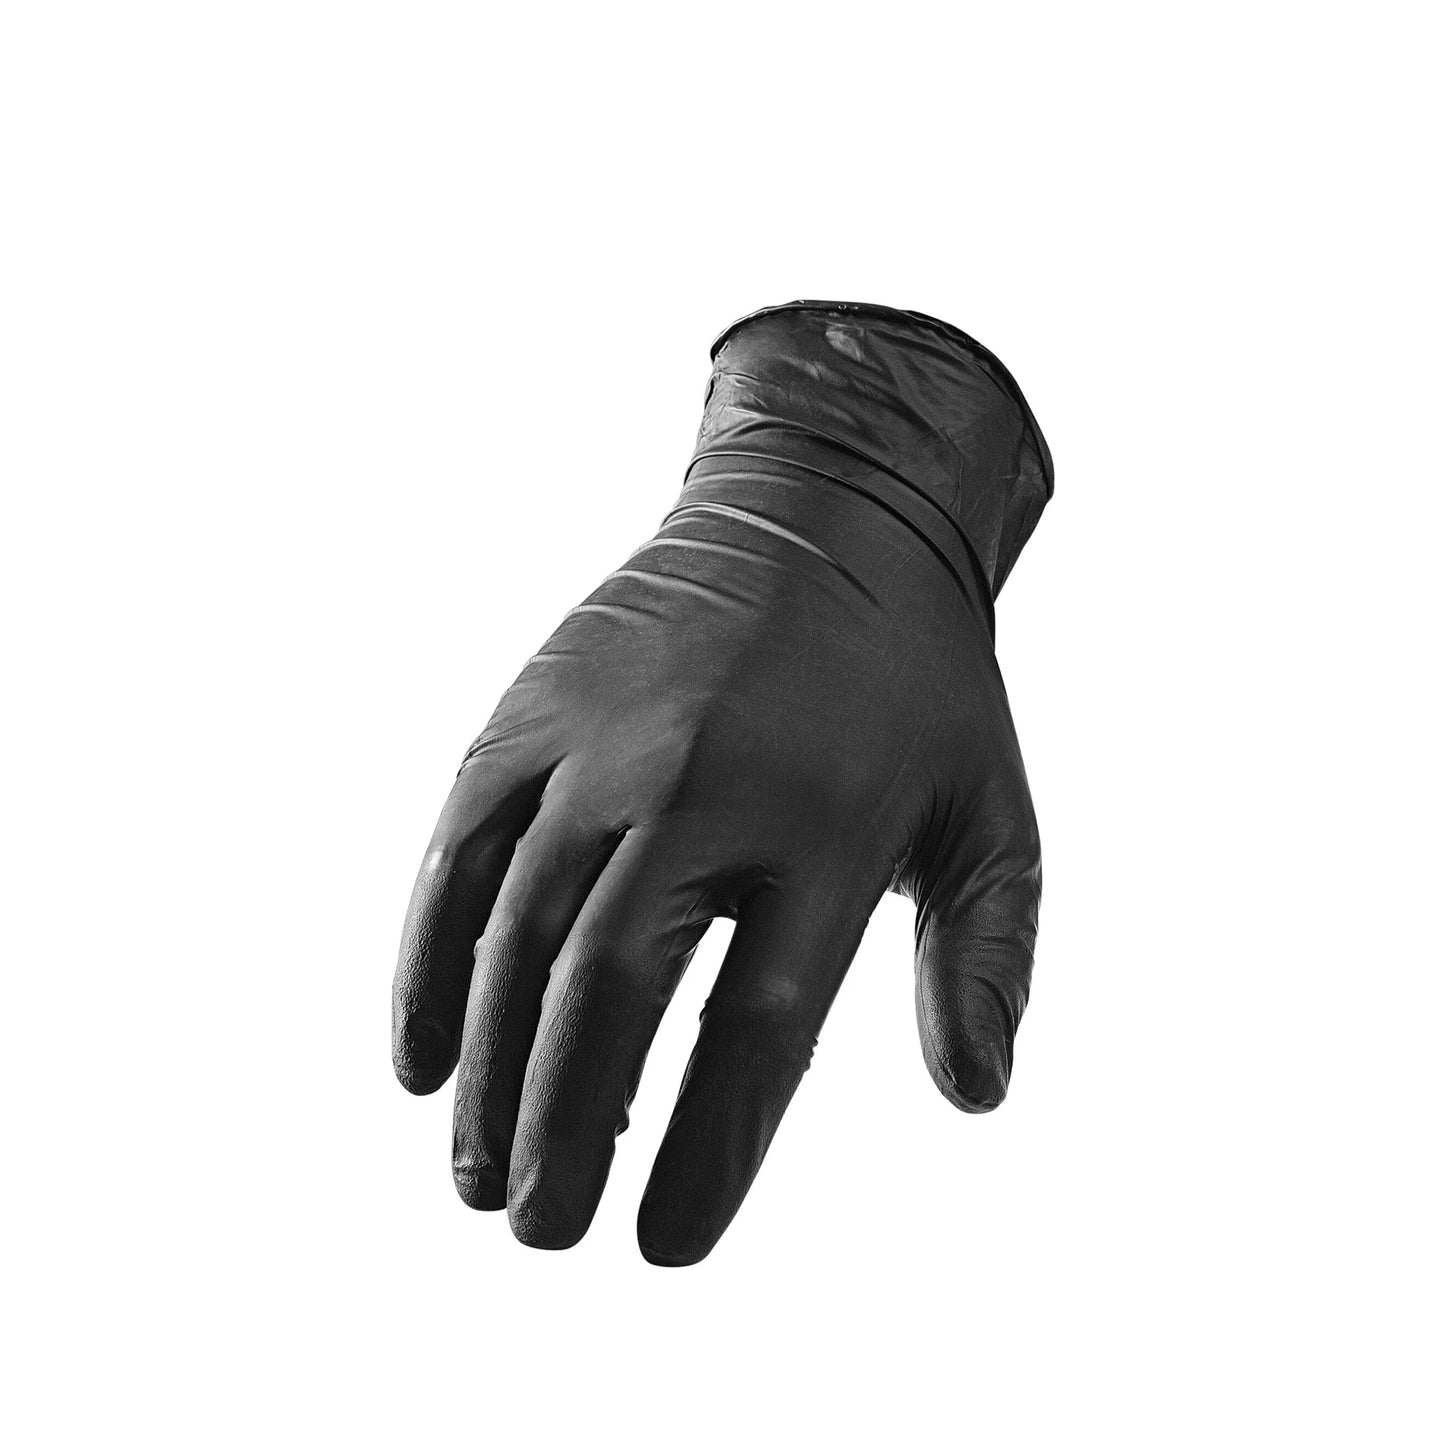 NI-Flex 5 Mil Nitrile Disposable Gloves - 100 Pack